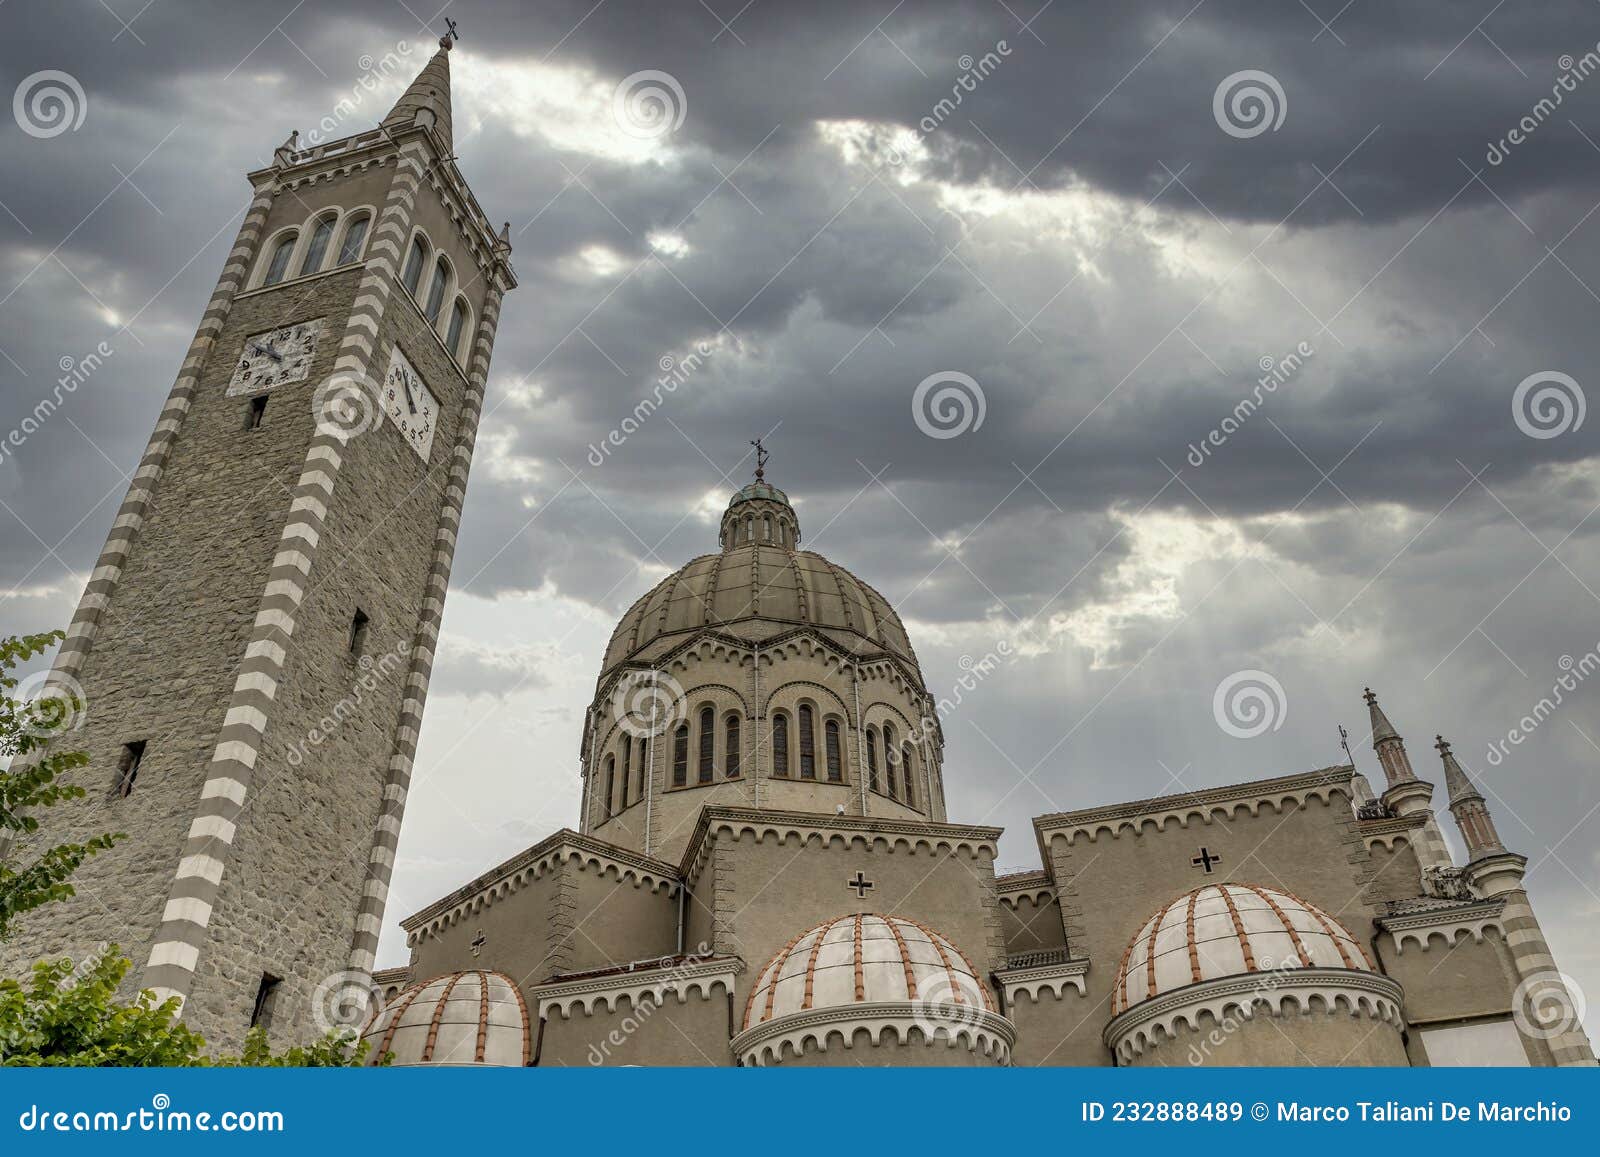 the parish church of san mamante, lizzano in belvedere, italy, under a dramatic sky